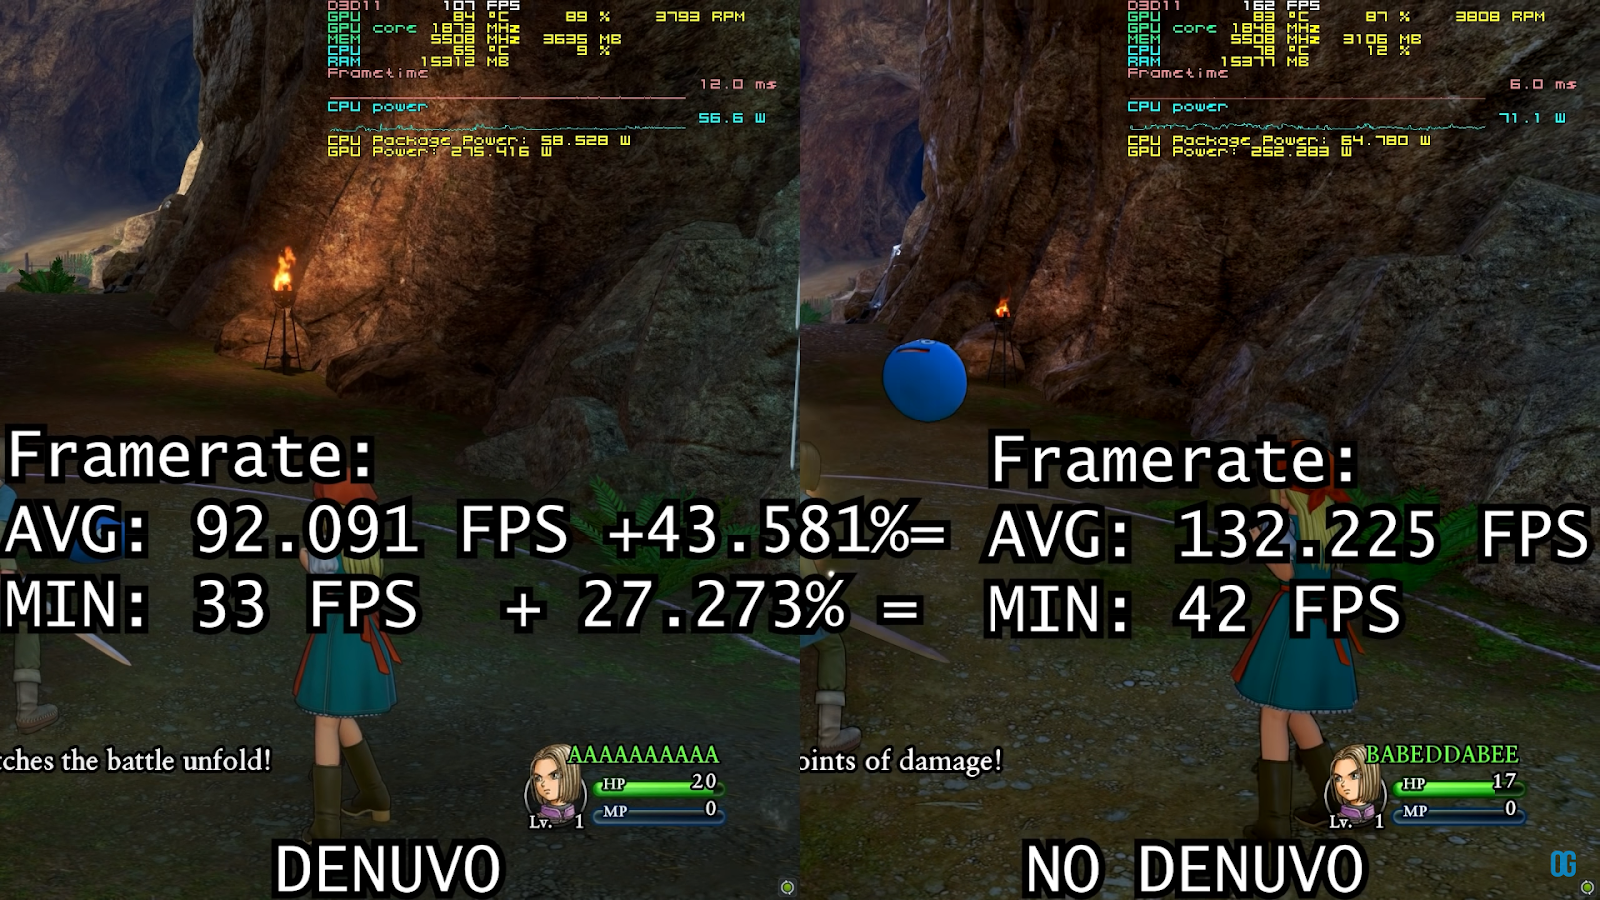 Без Denuvo фреймрейт в Dragon Quest IX значительно возрос